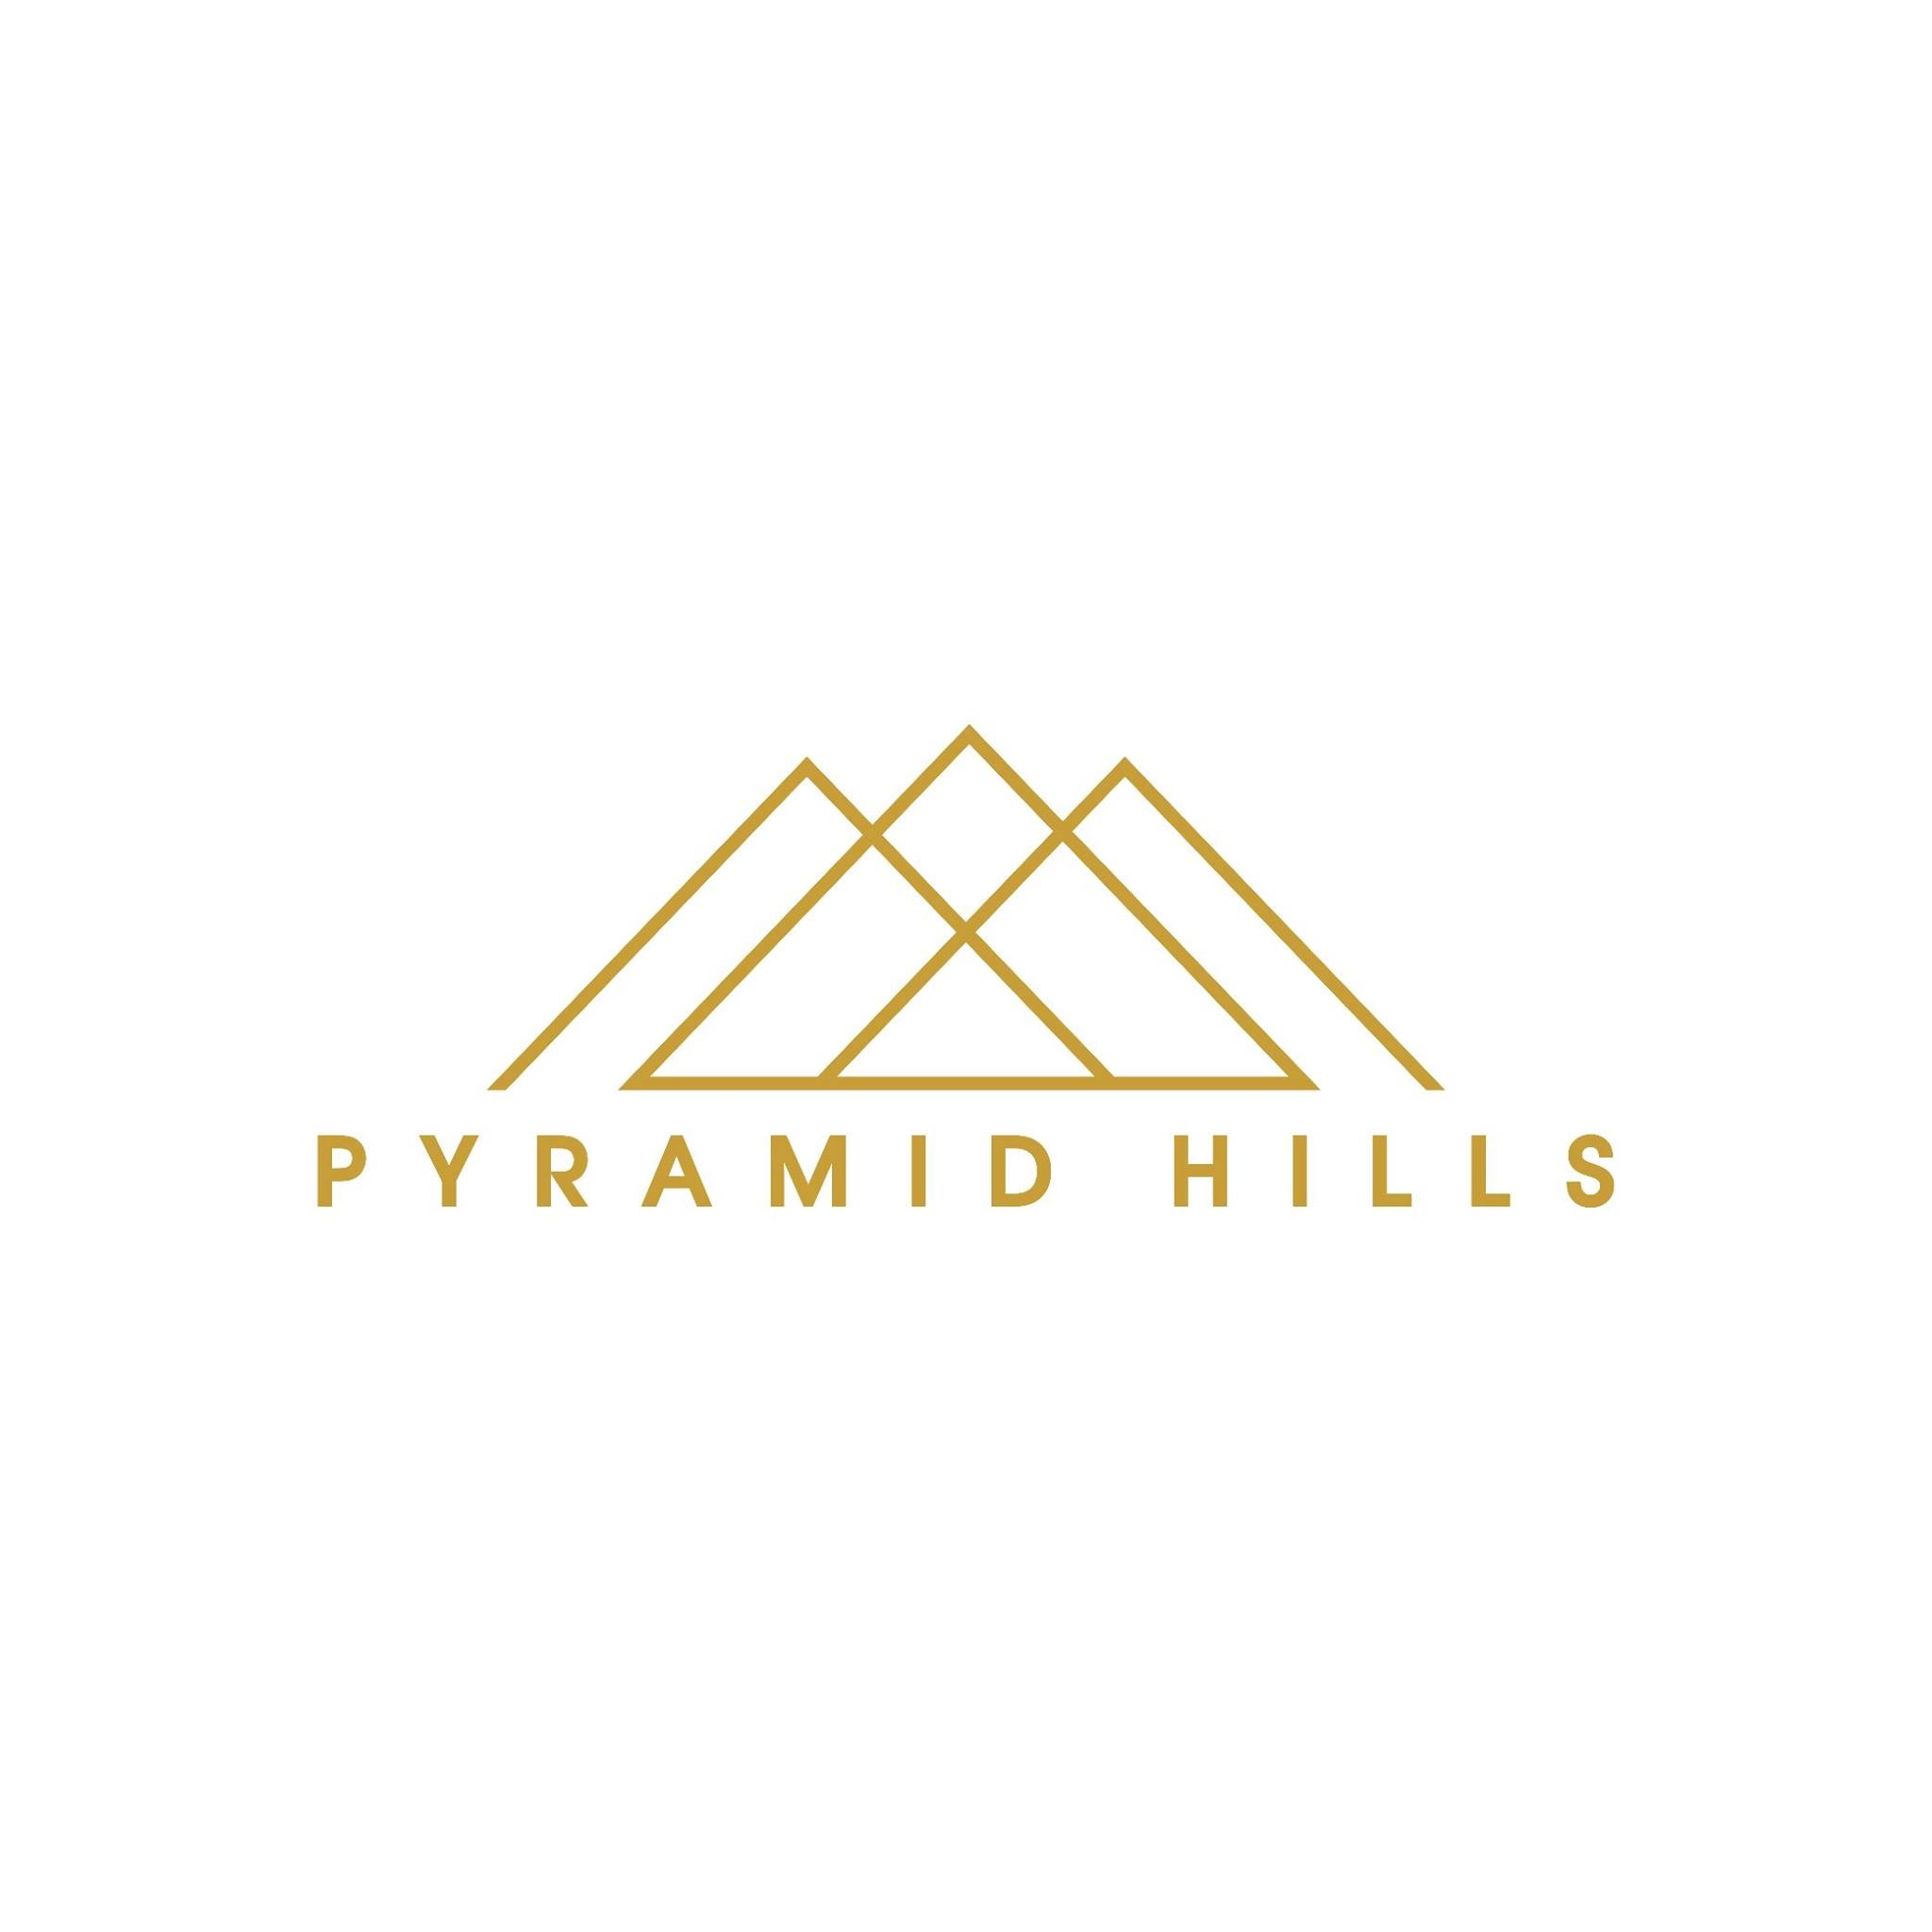 Pyramid Hills